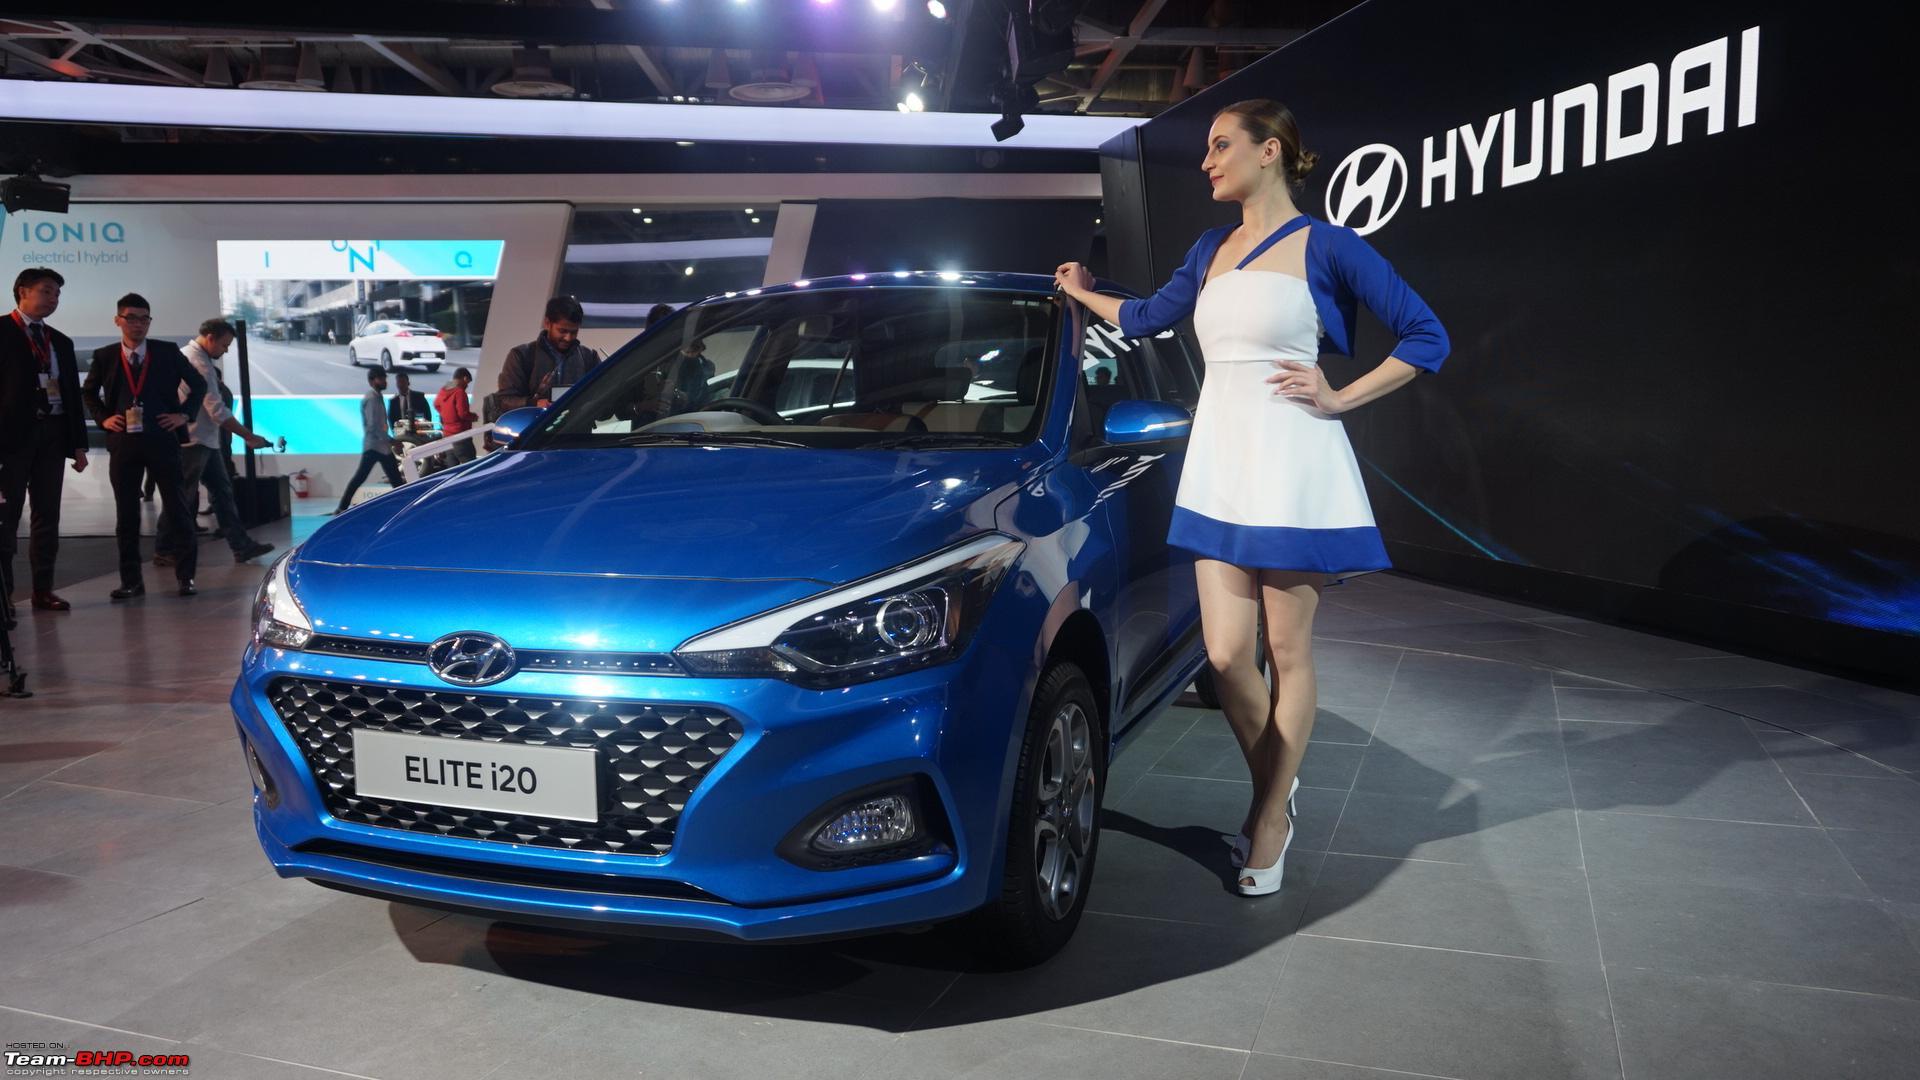 Rumour Hyundai Updates Elite I20 Line Up With New Features